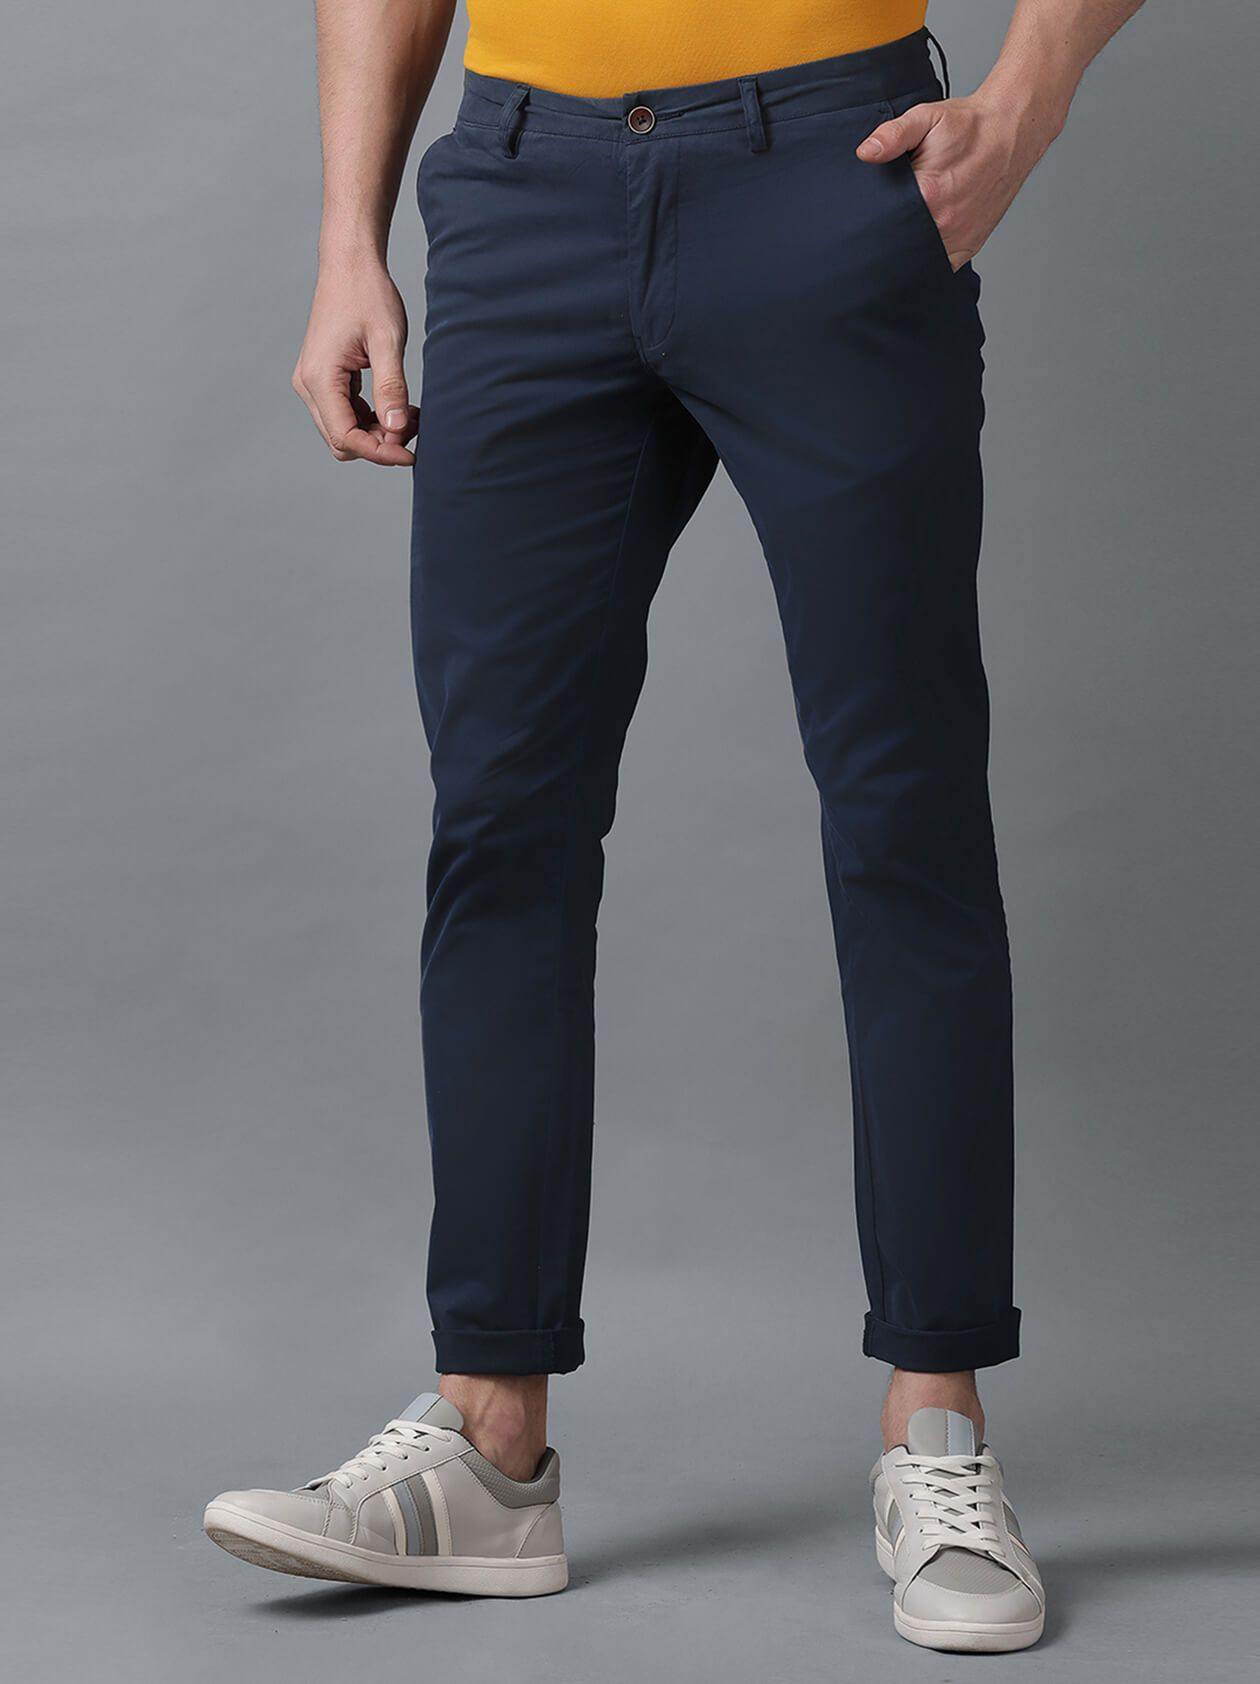 Buy Men's Teal Blue Slim Fit Trousers Online at Bewakoof